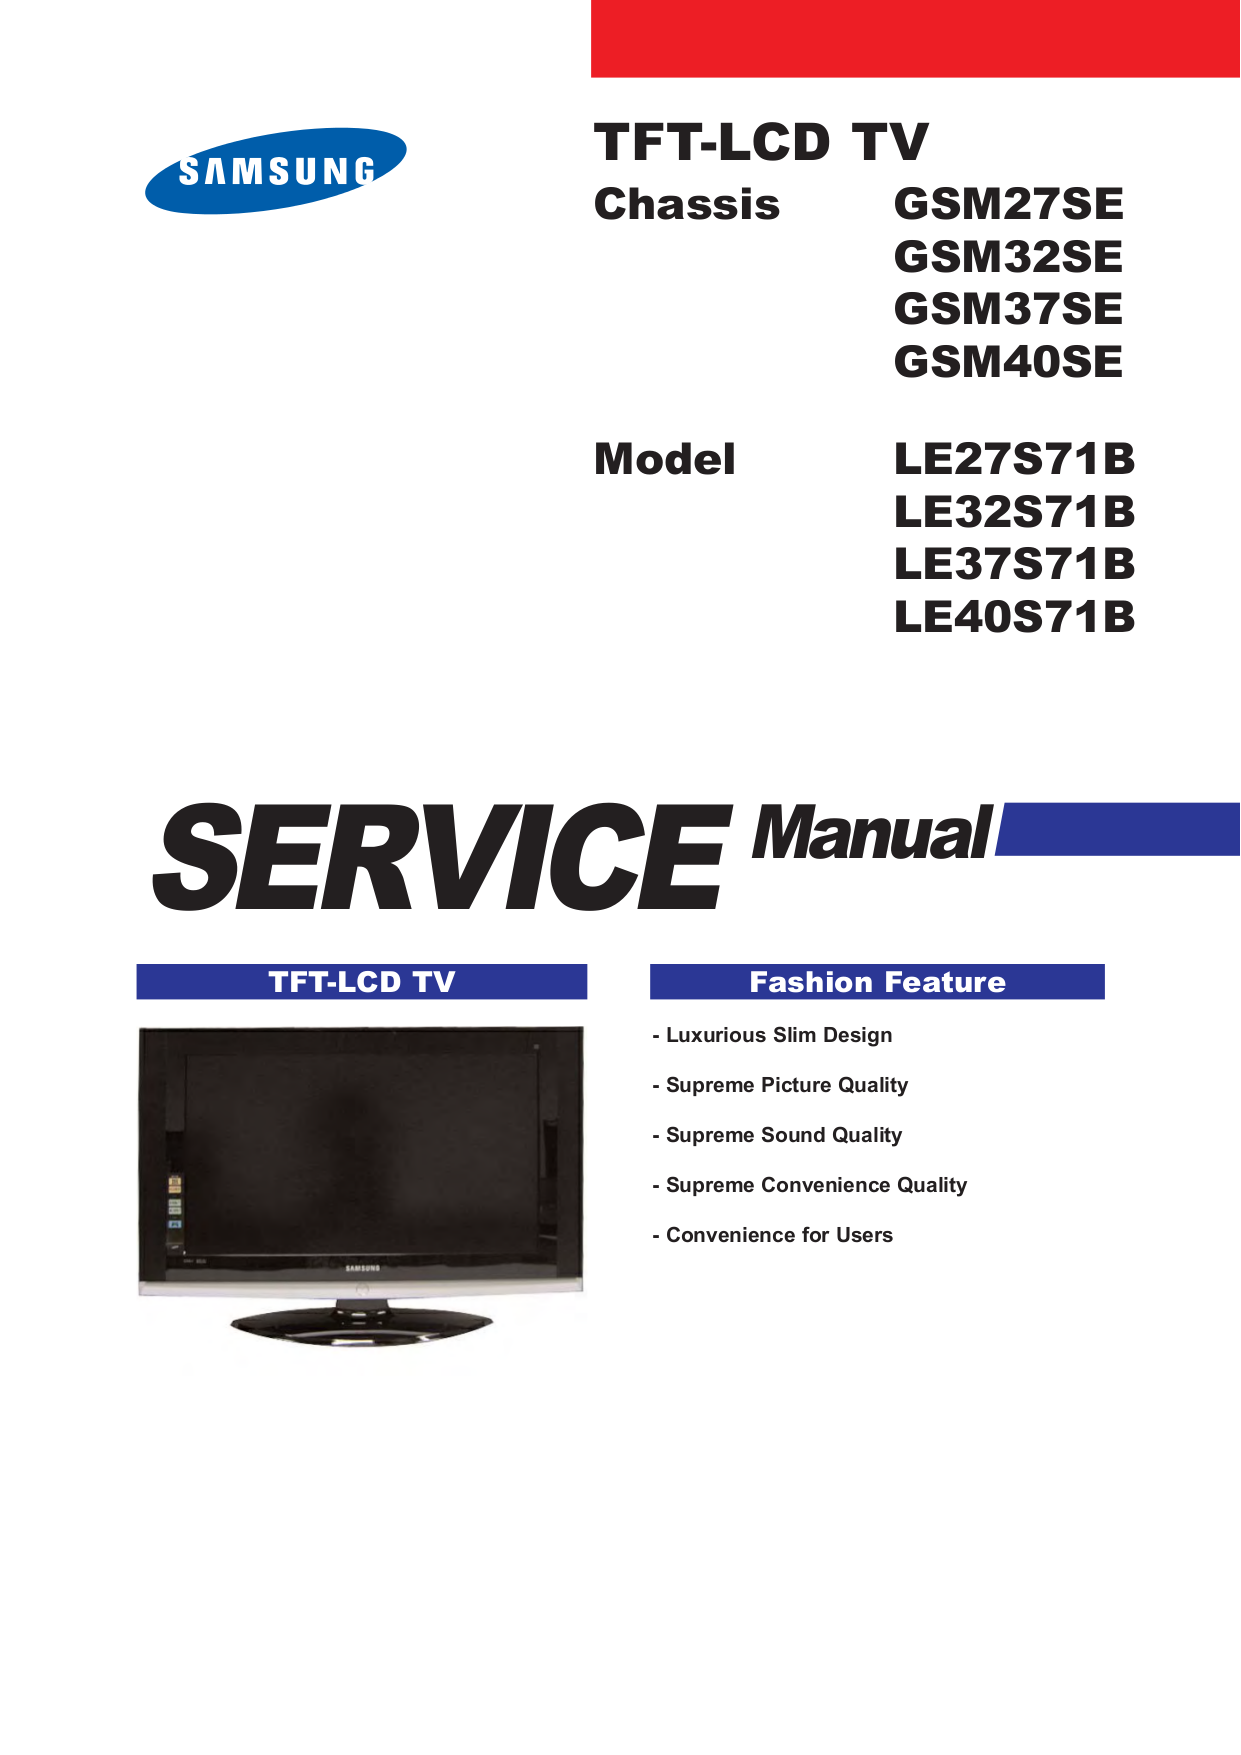 Download free pdf for Samsung LE32R51B TV manual